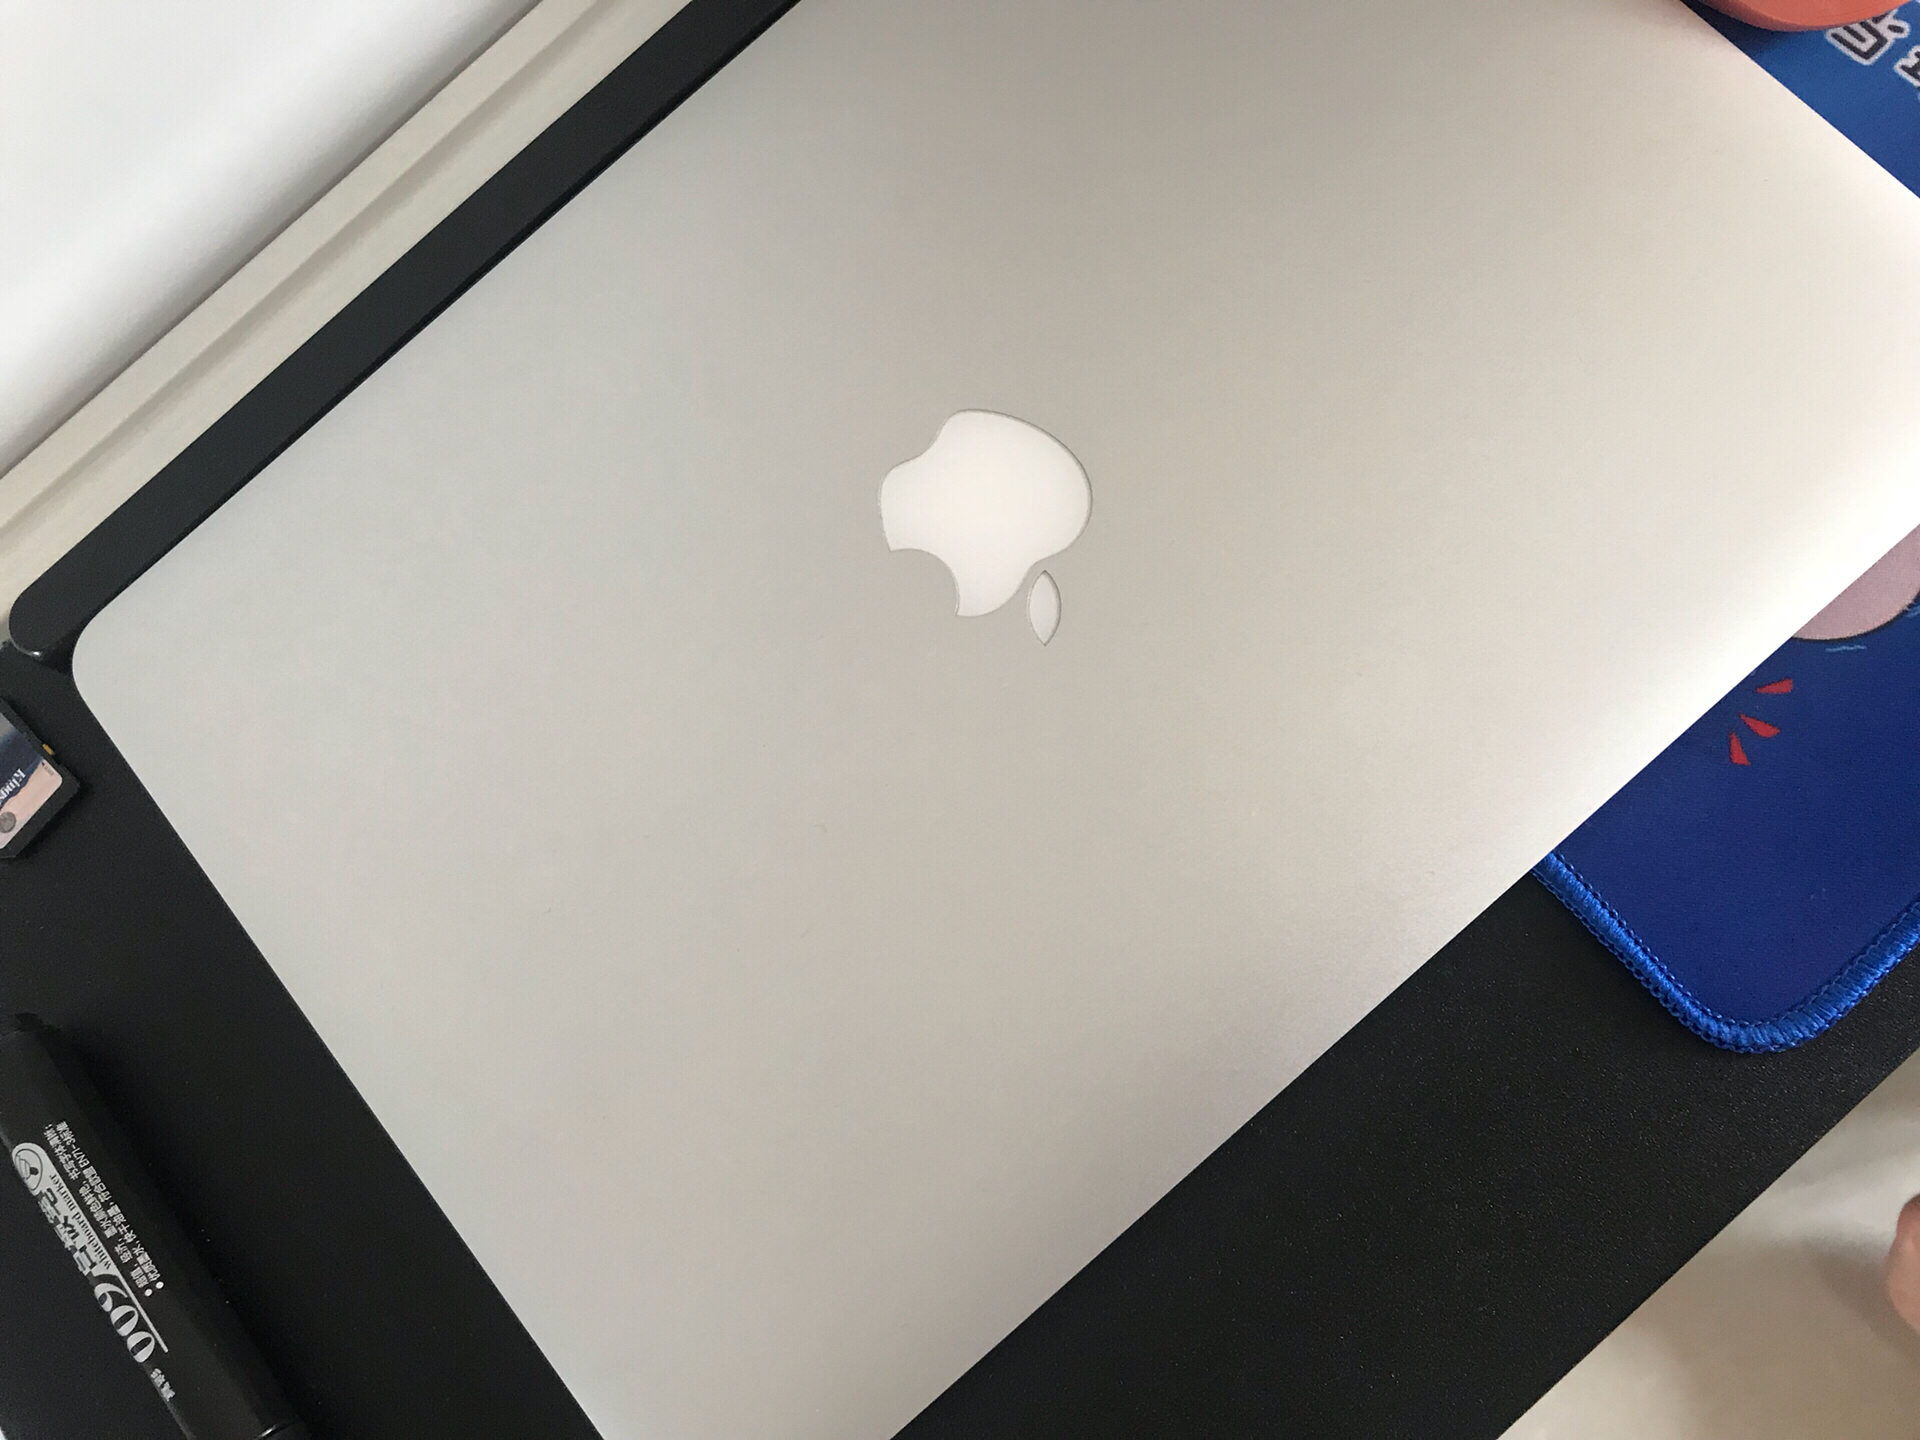 macbookair 苹果笔记本 成色全新999